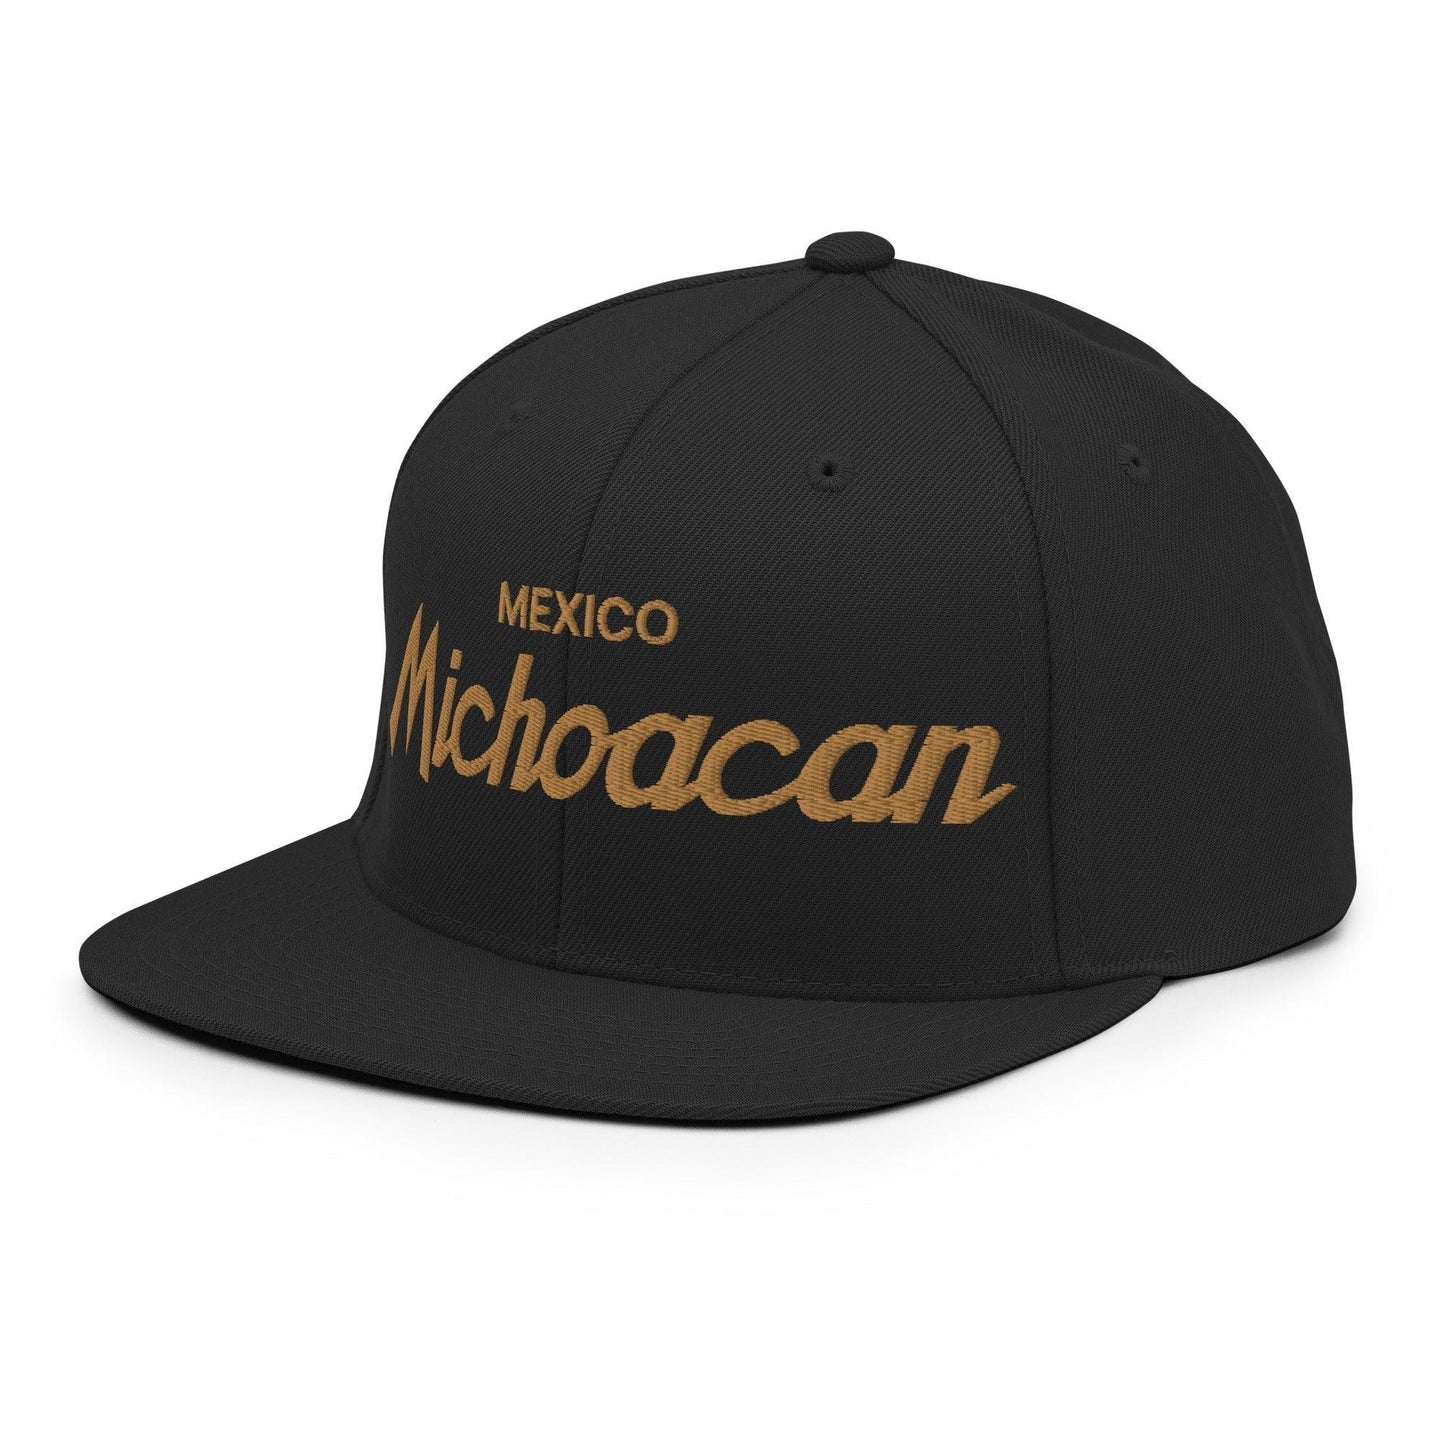 Michoacan Mexico Gold Vintage Sports Script Snapback Hat Black